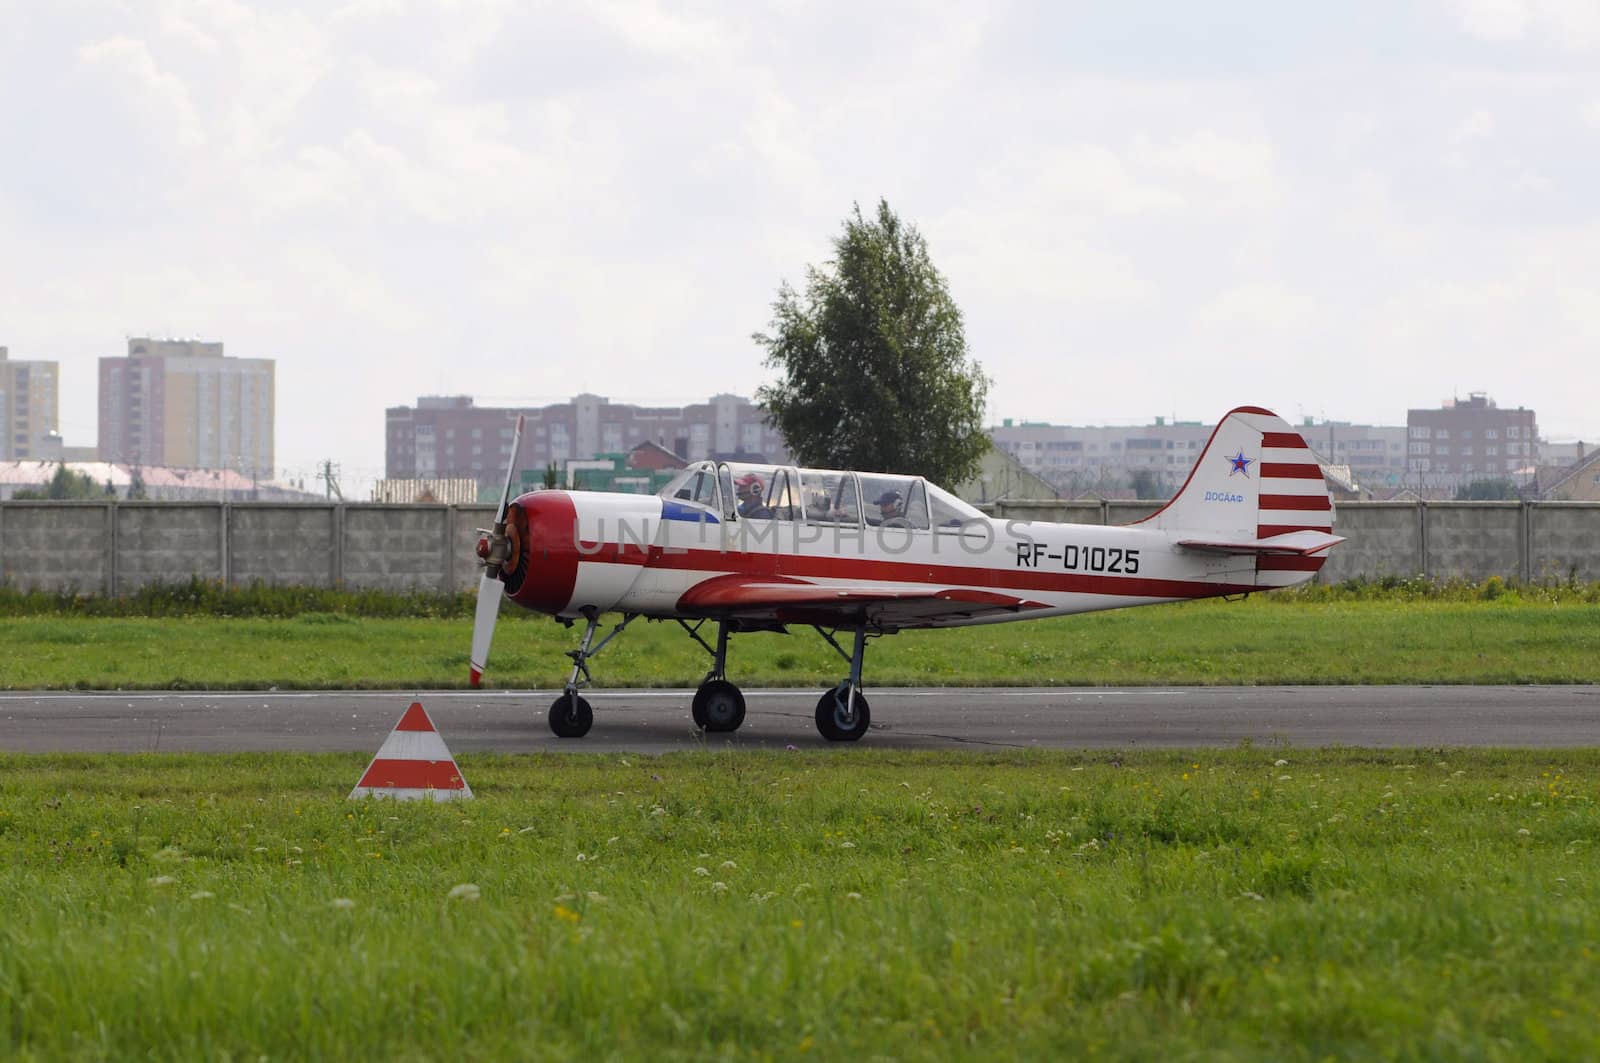 Air show "On a visit at Utair". Tyumen, Russia. by veronka72